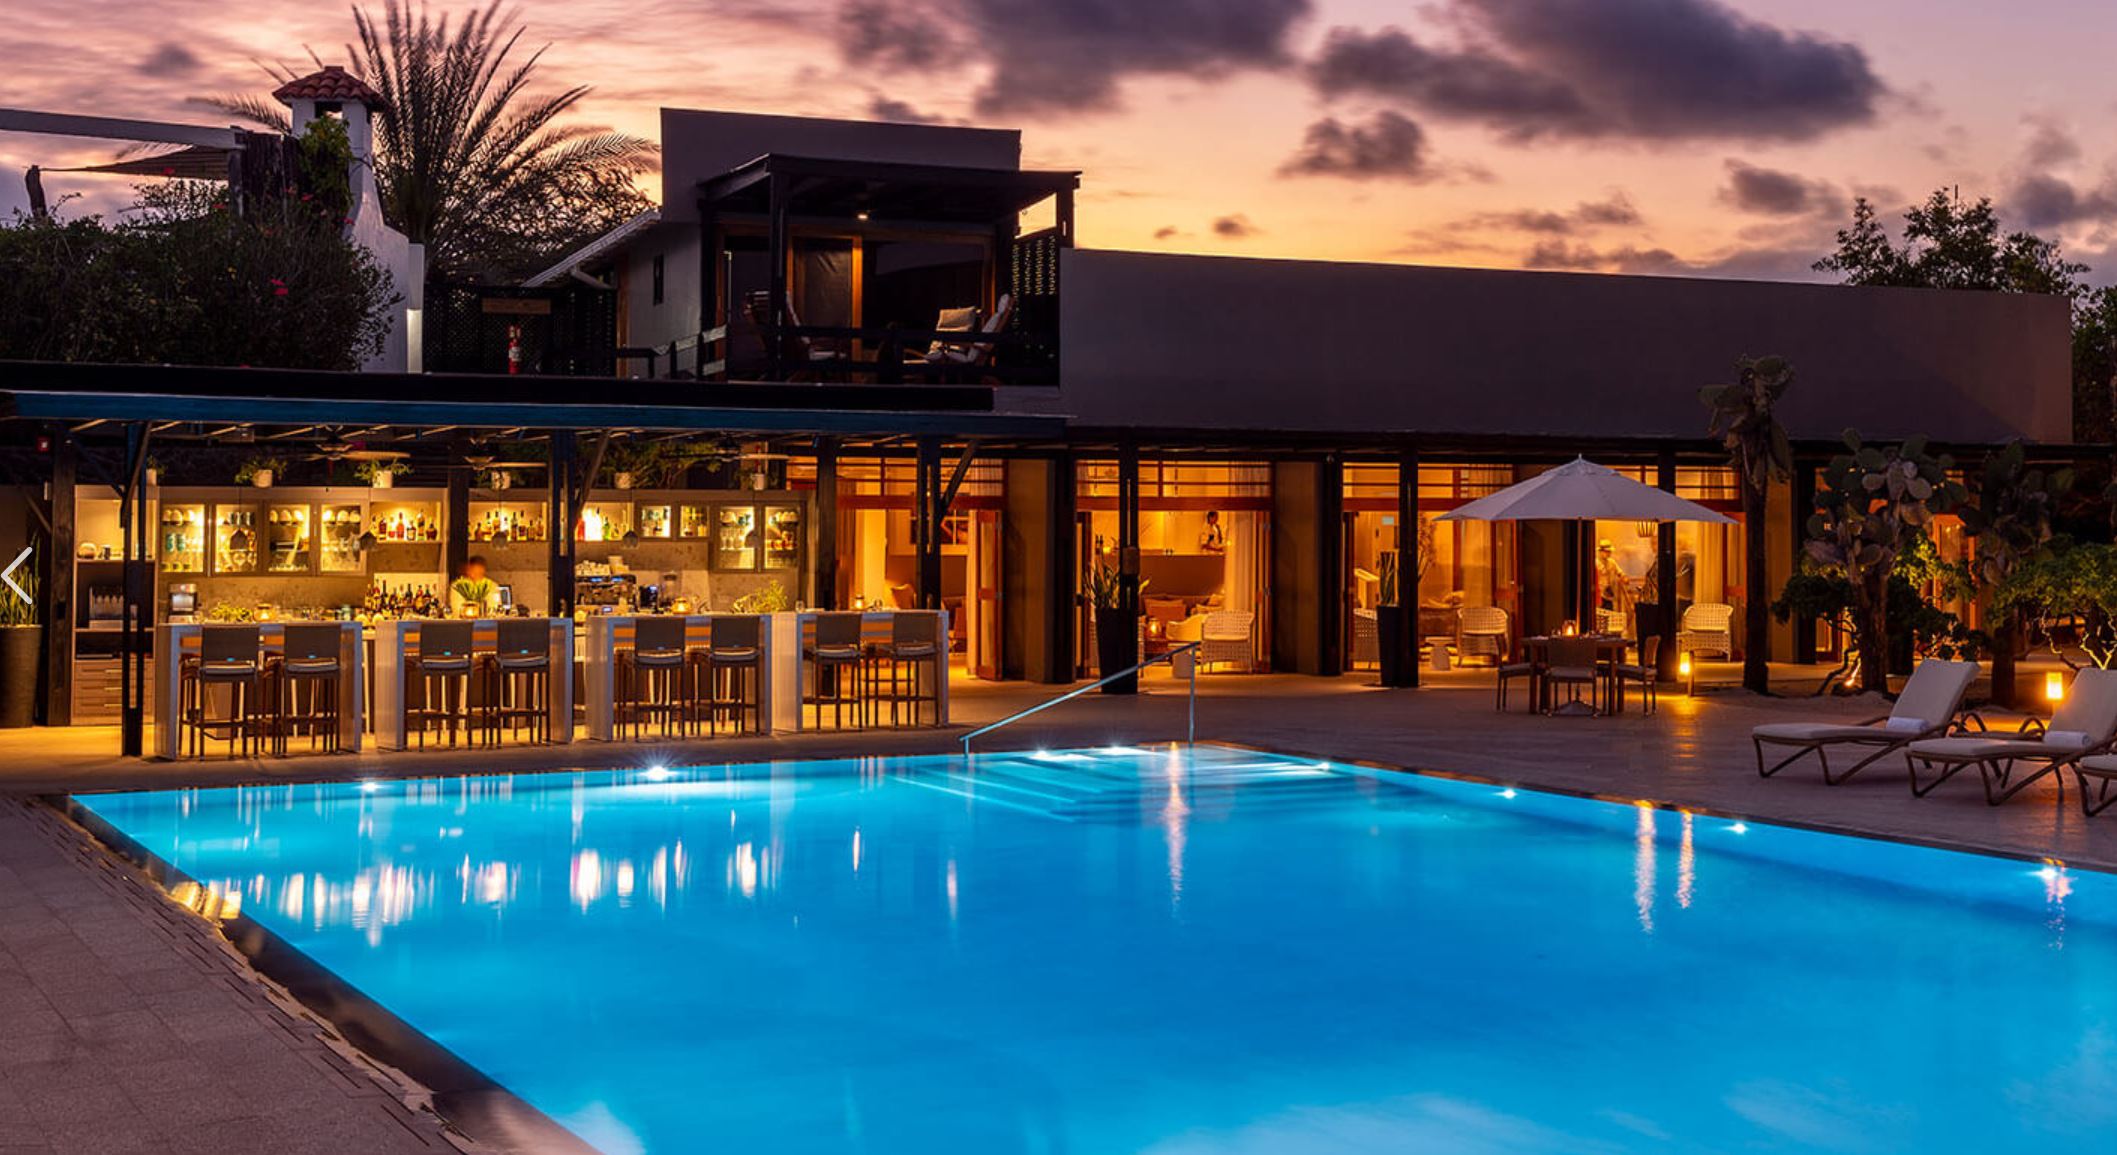 Finch Bay Galapagos Hotel, Puerto Ayora, Santa Cruz Island: Finch Bay Galapagos Hotel, Puerto Ayora, Insel Santa Cruz, Basishotel für Ihr Inselhüpfen-Programm